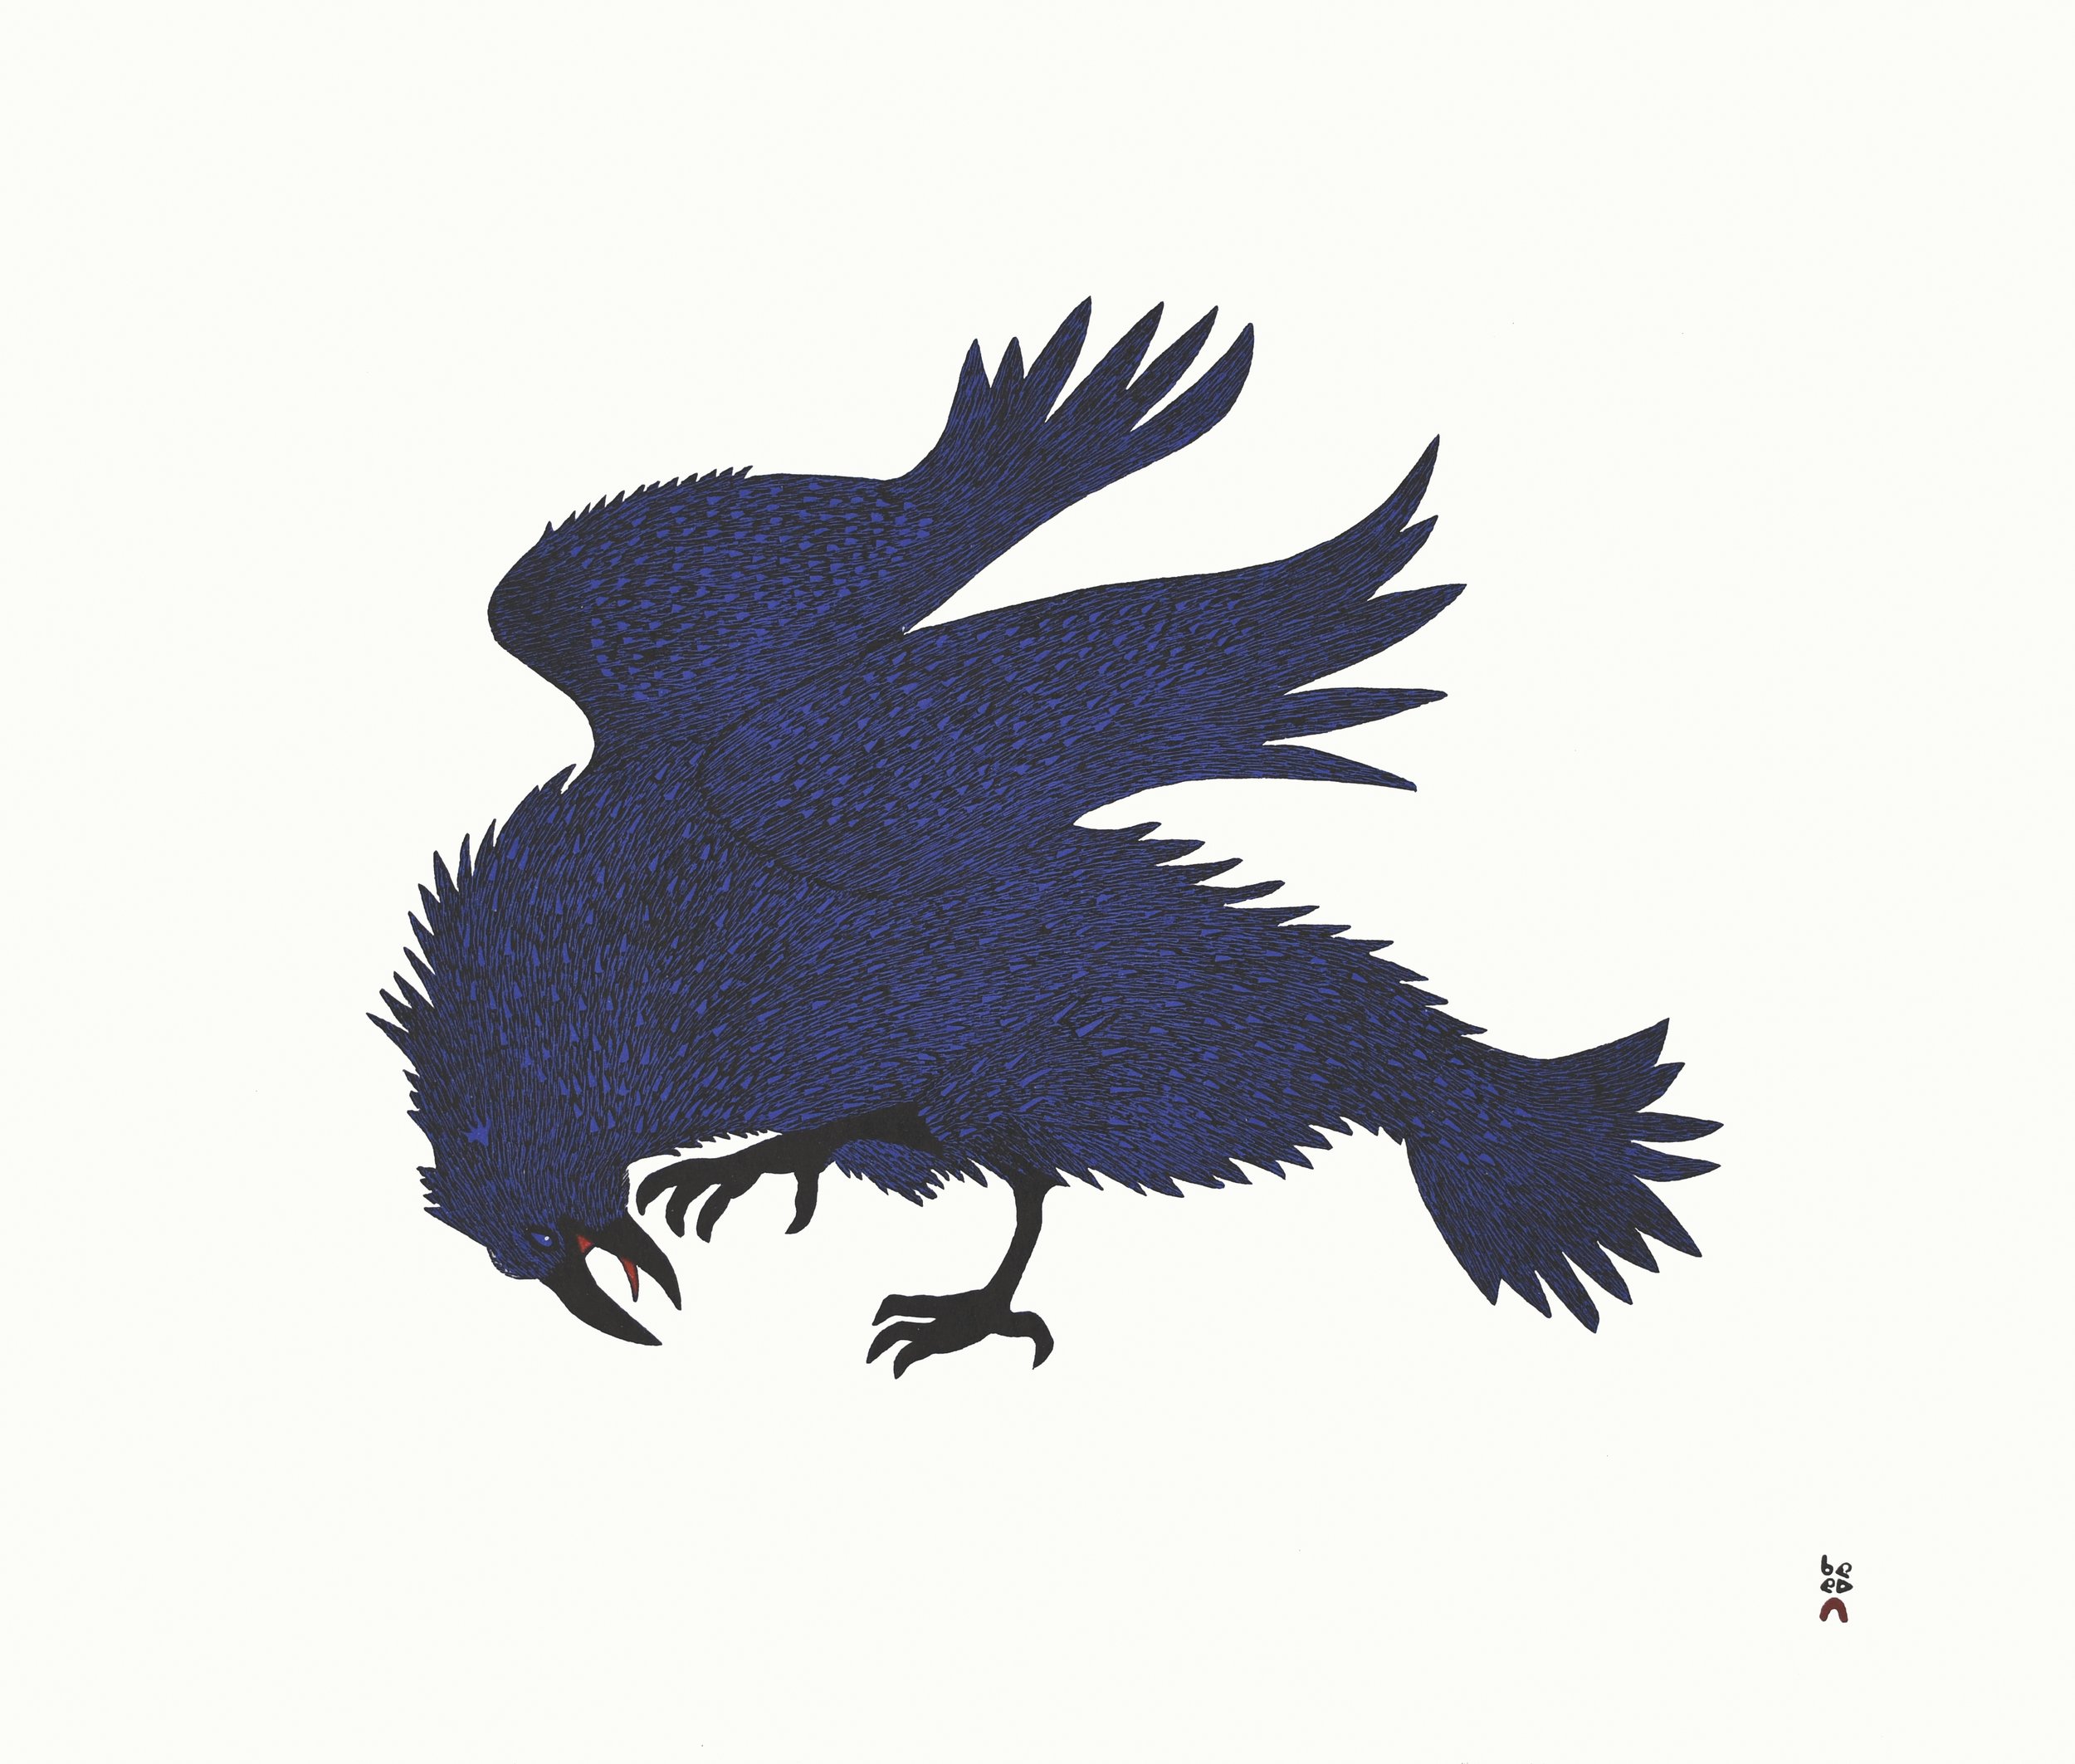 QUVIANAQTUK PUDLAT
31. Electric Raven
Stonecut & Stencil
Paper: Kizuki Kozo White
Printer: Qavavau Manumie
62 x 73 cm
24 ½” x 28 ¾”
$ 900
$720